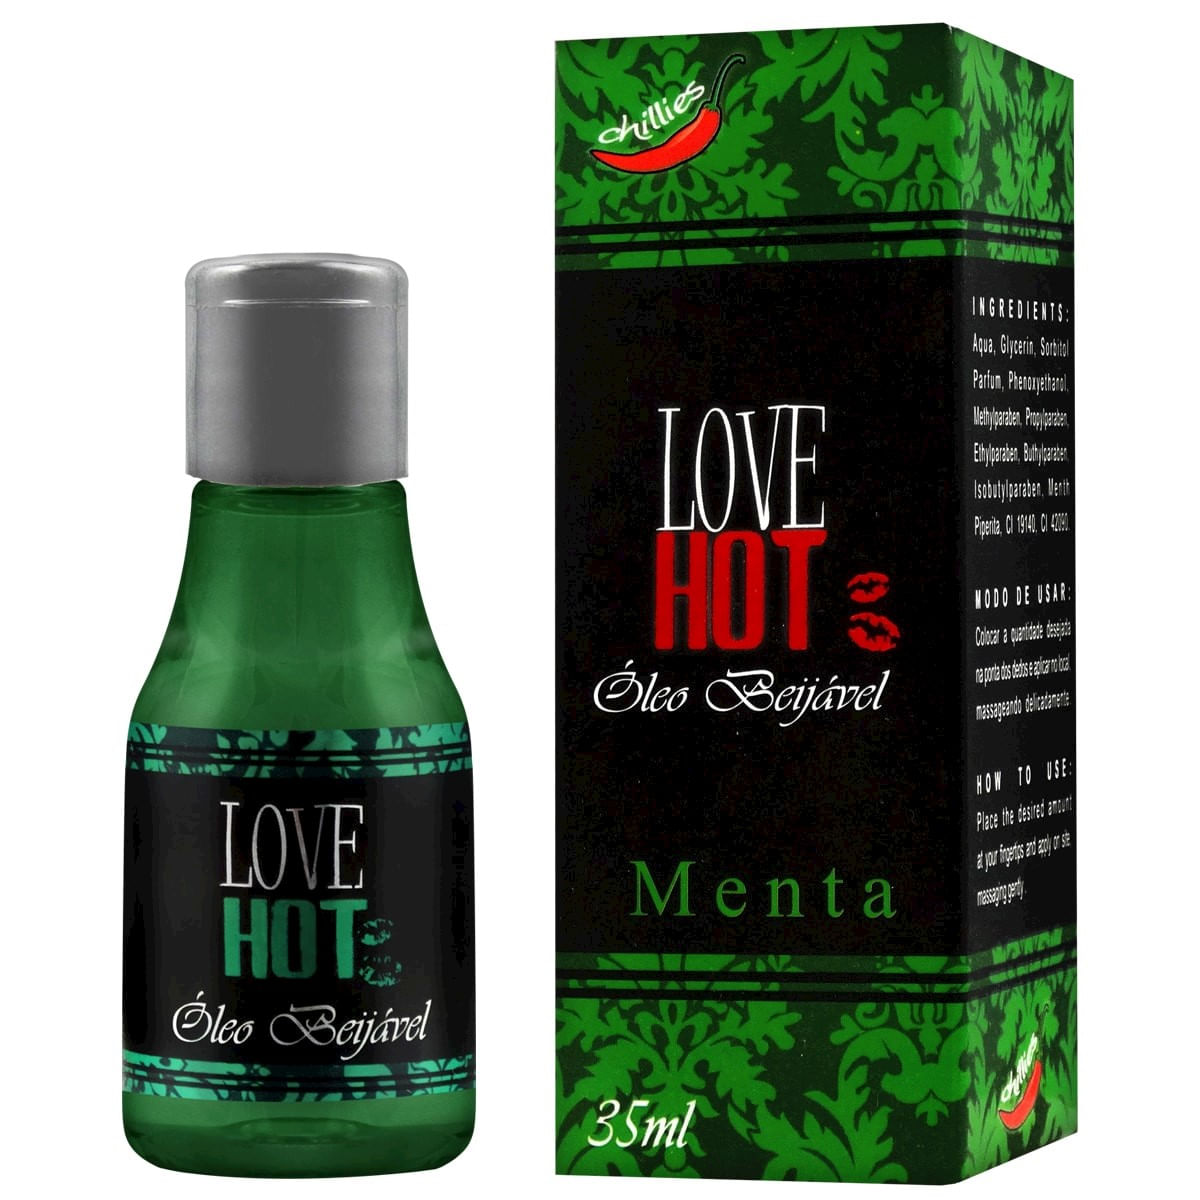 Love Hot Óleo Beijável de Menta 35ml Chillies